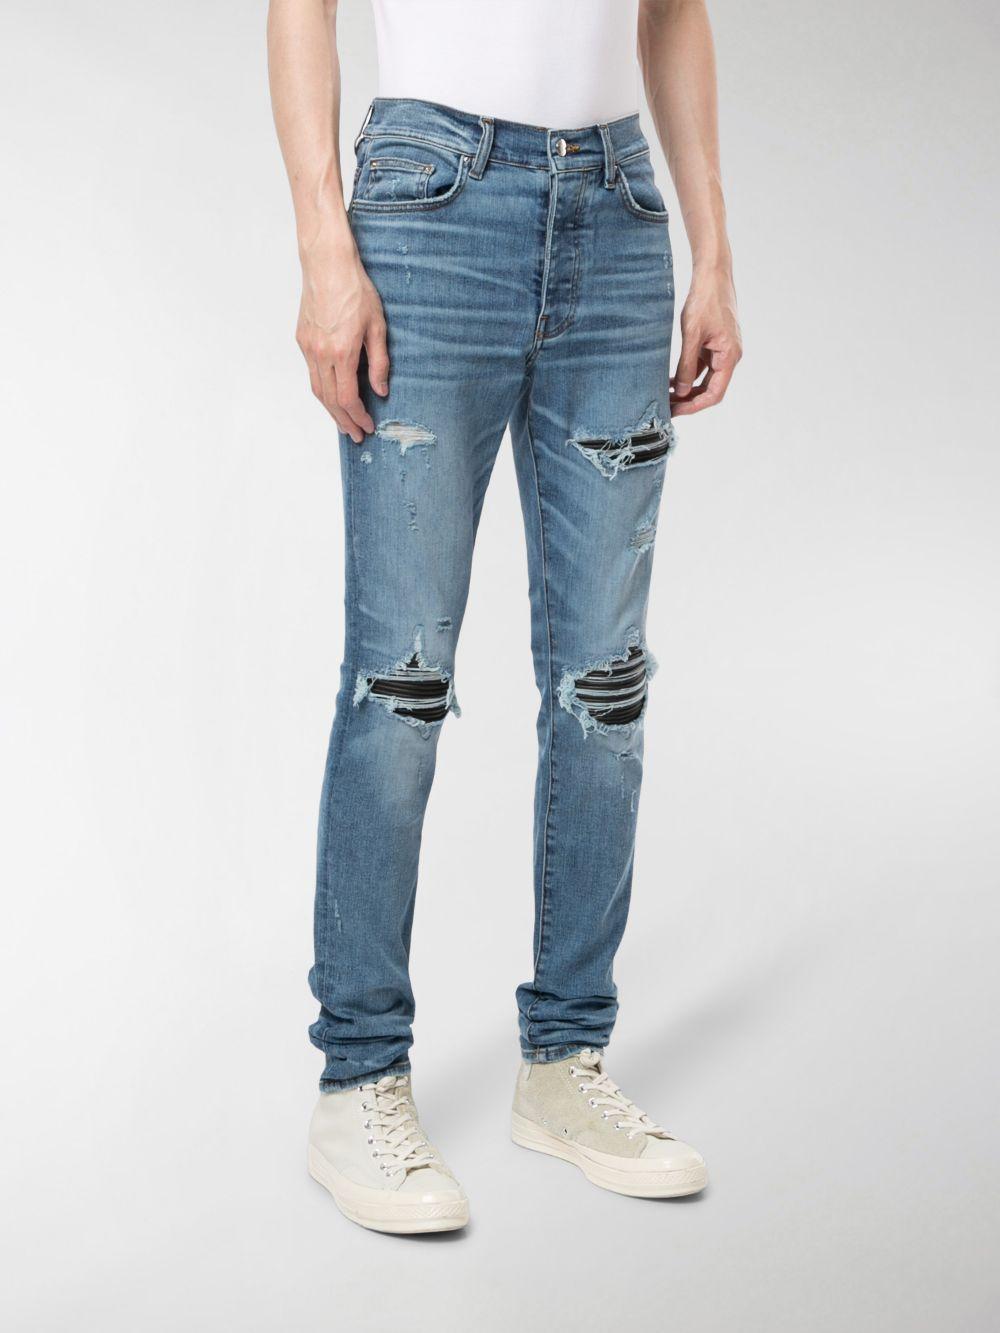 Amiri Denim Mx1 Skinny Jeans in Blue for Men - Lyst